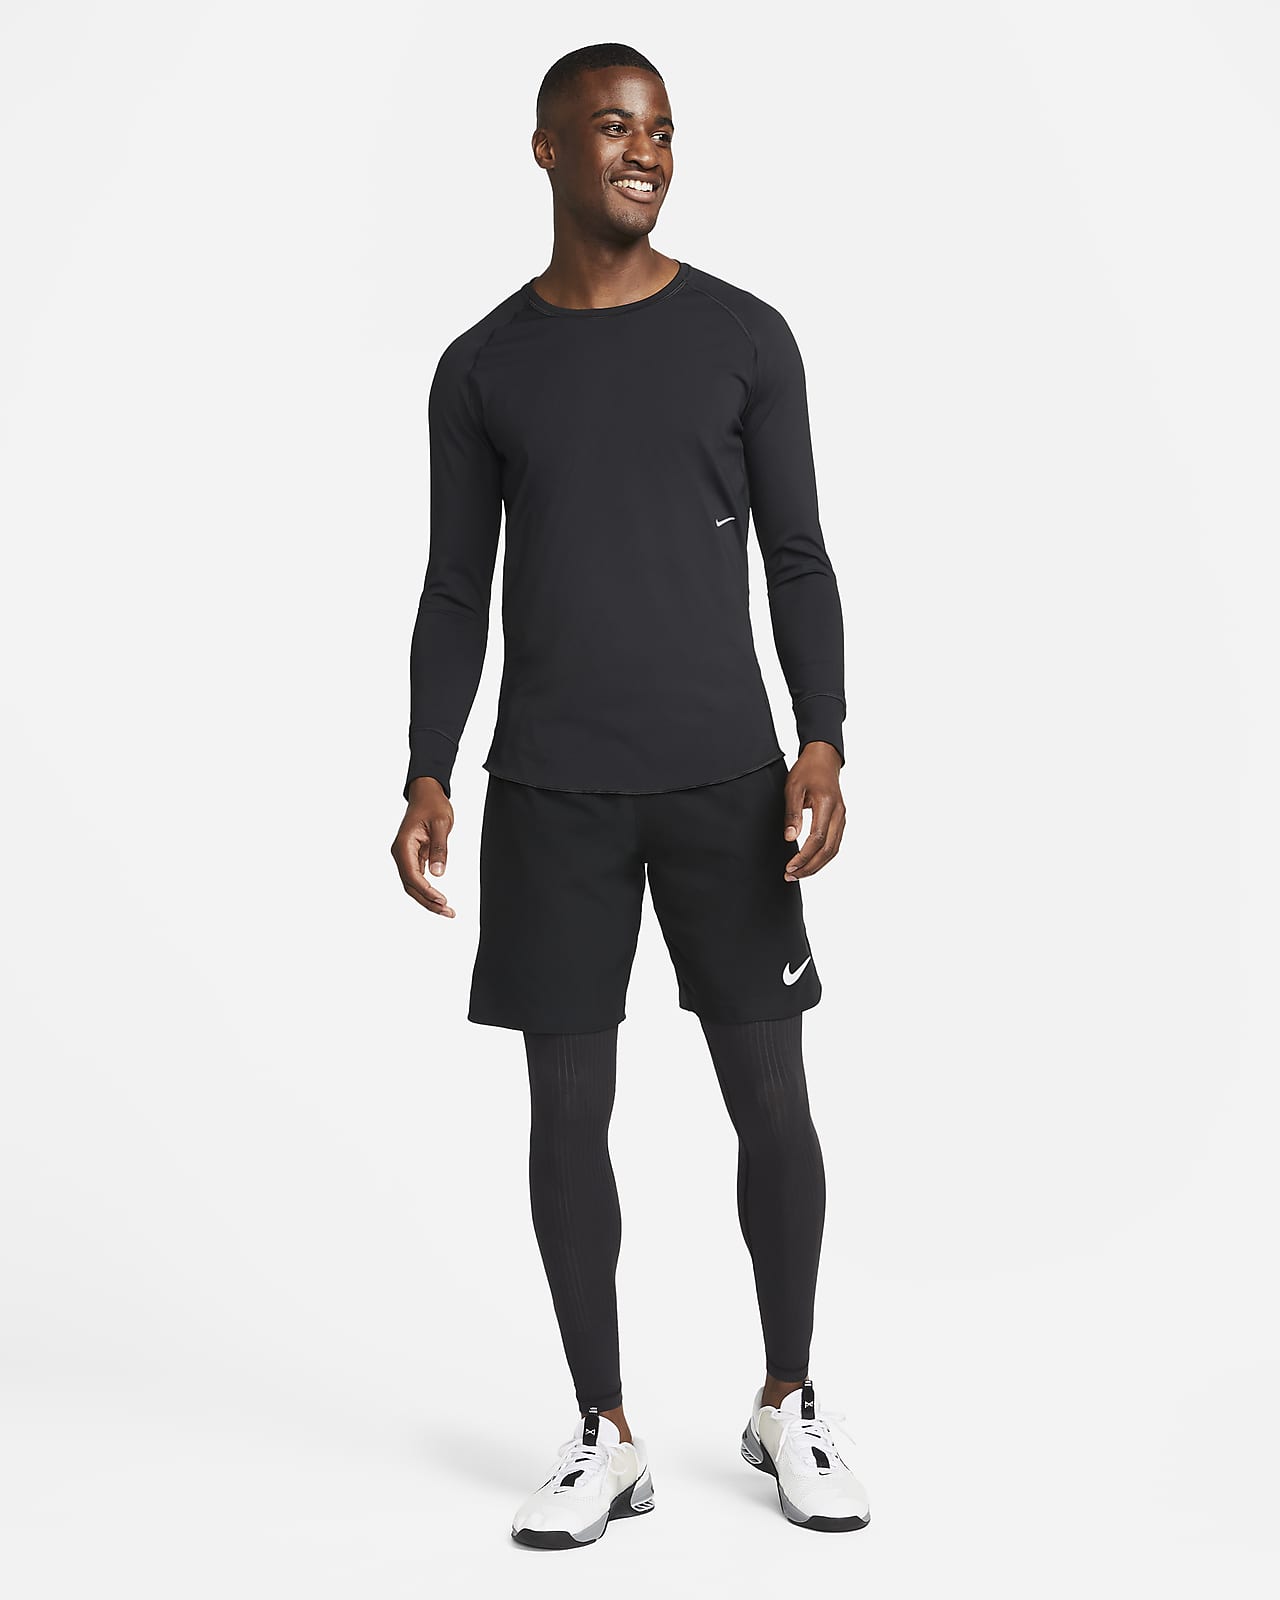 Nike – Tagged Colour_Black – Page 8 – Dynamic Sports